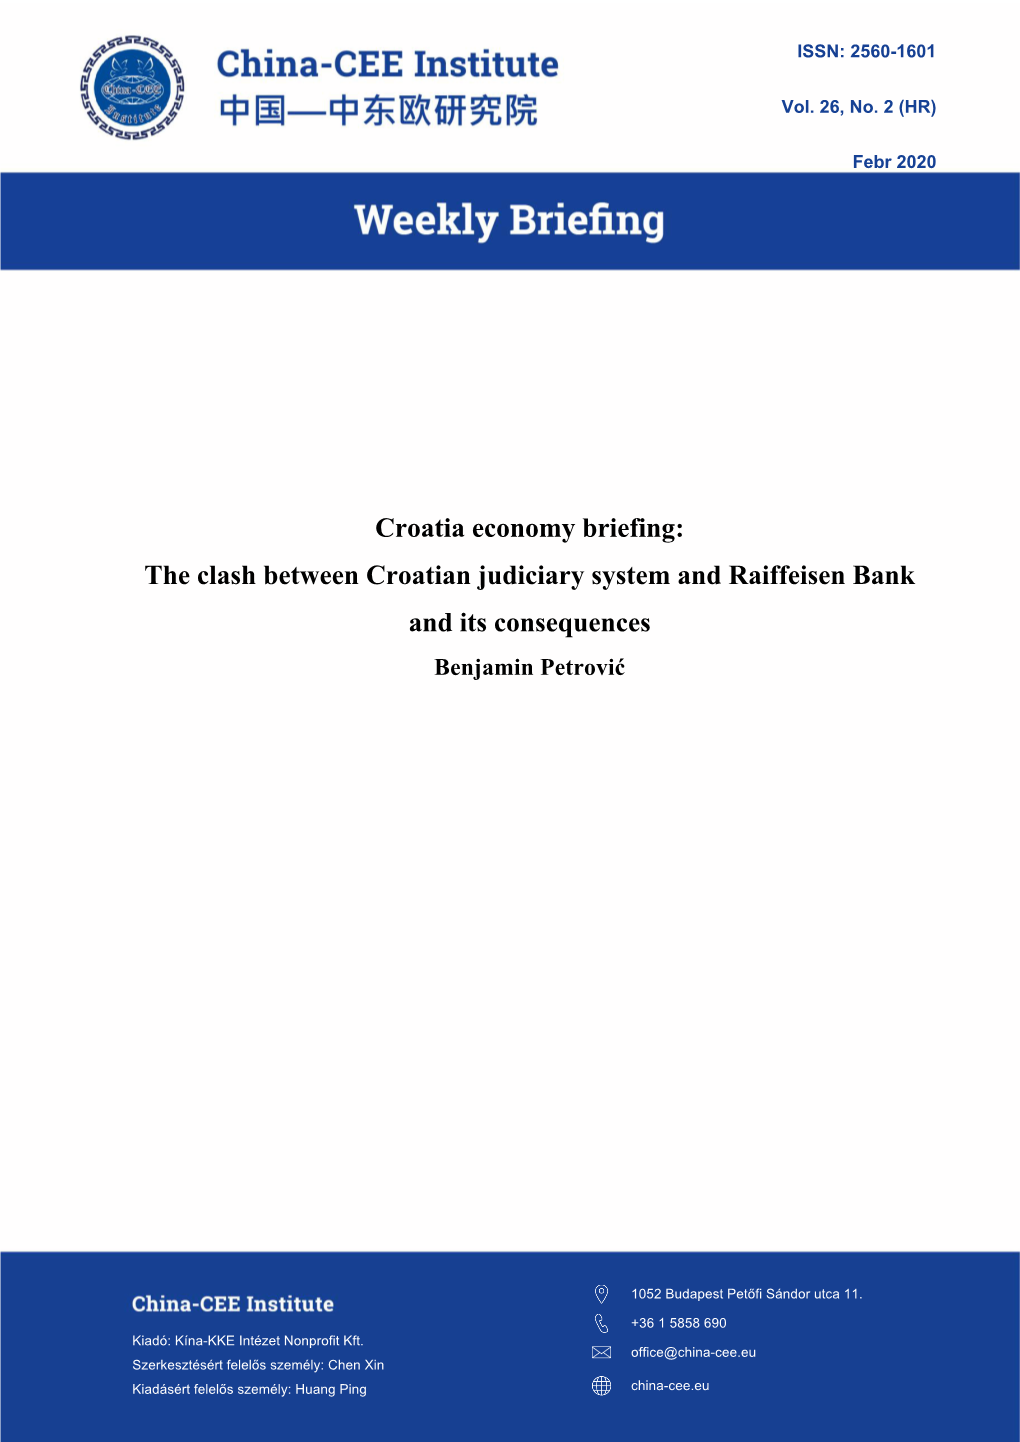 Croatia Economy Briefing: the Clash Between Croatian Judiciary System and Raiffeisen Bank and Its Consequences Benjamin Petrović